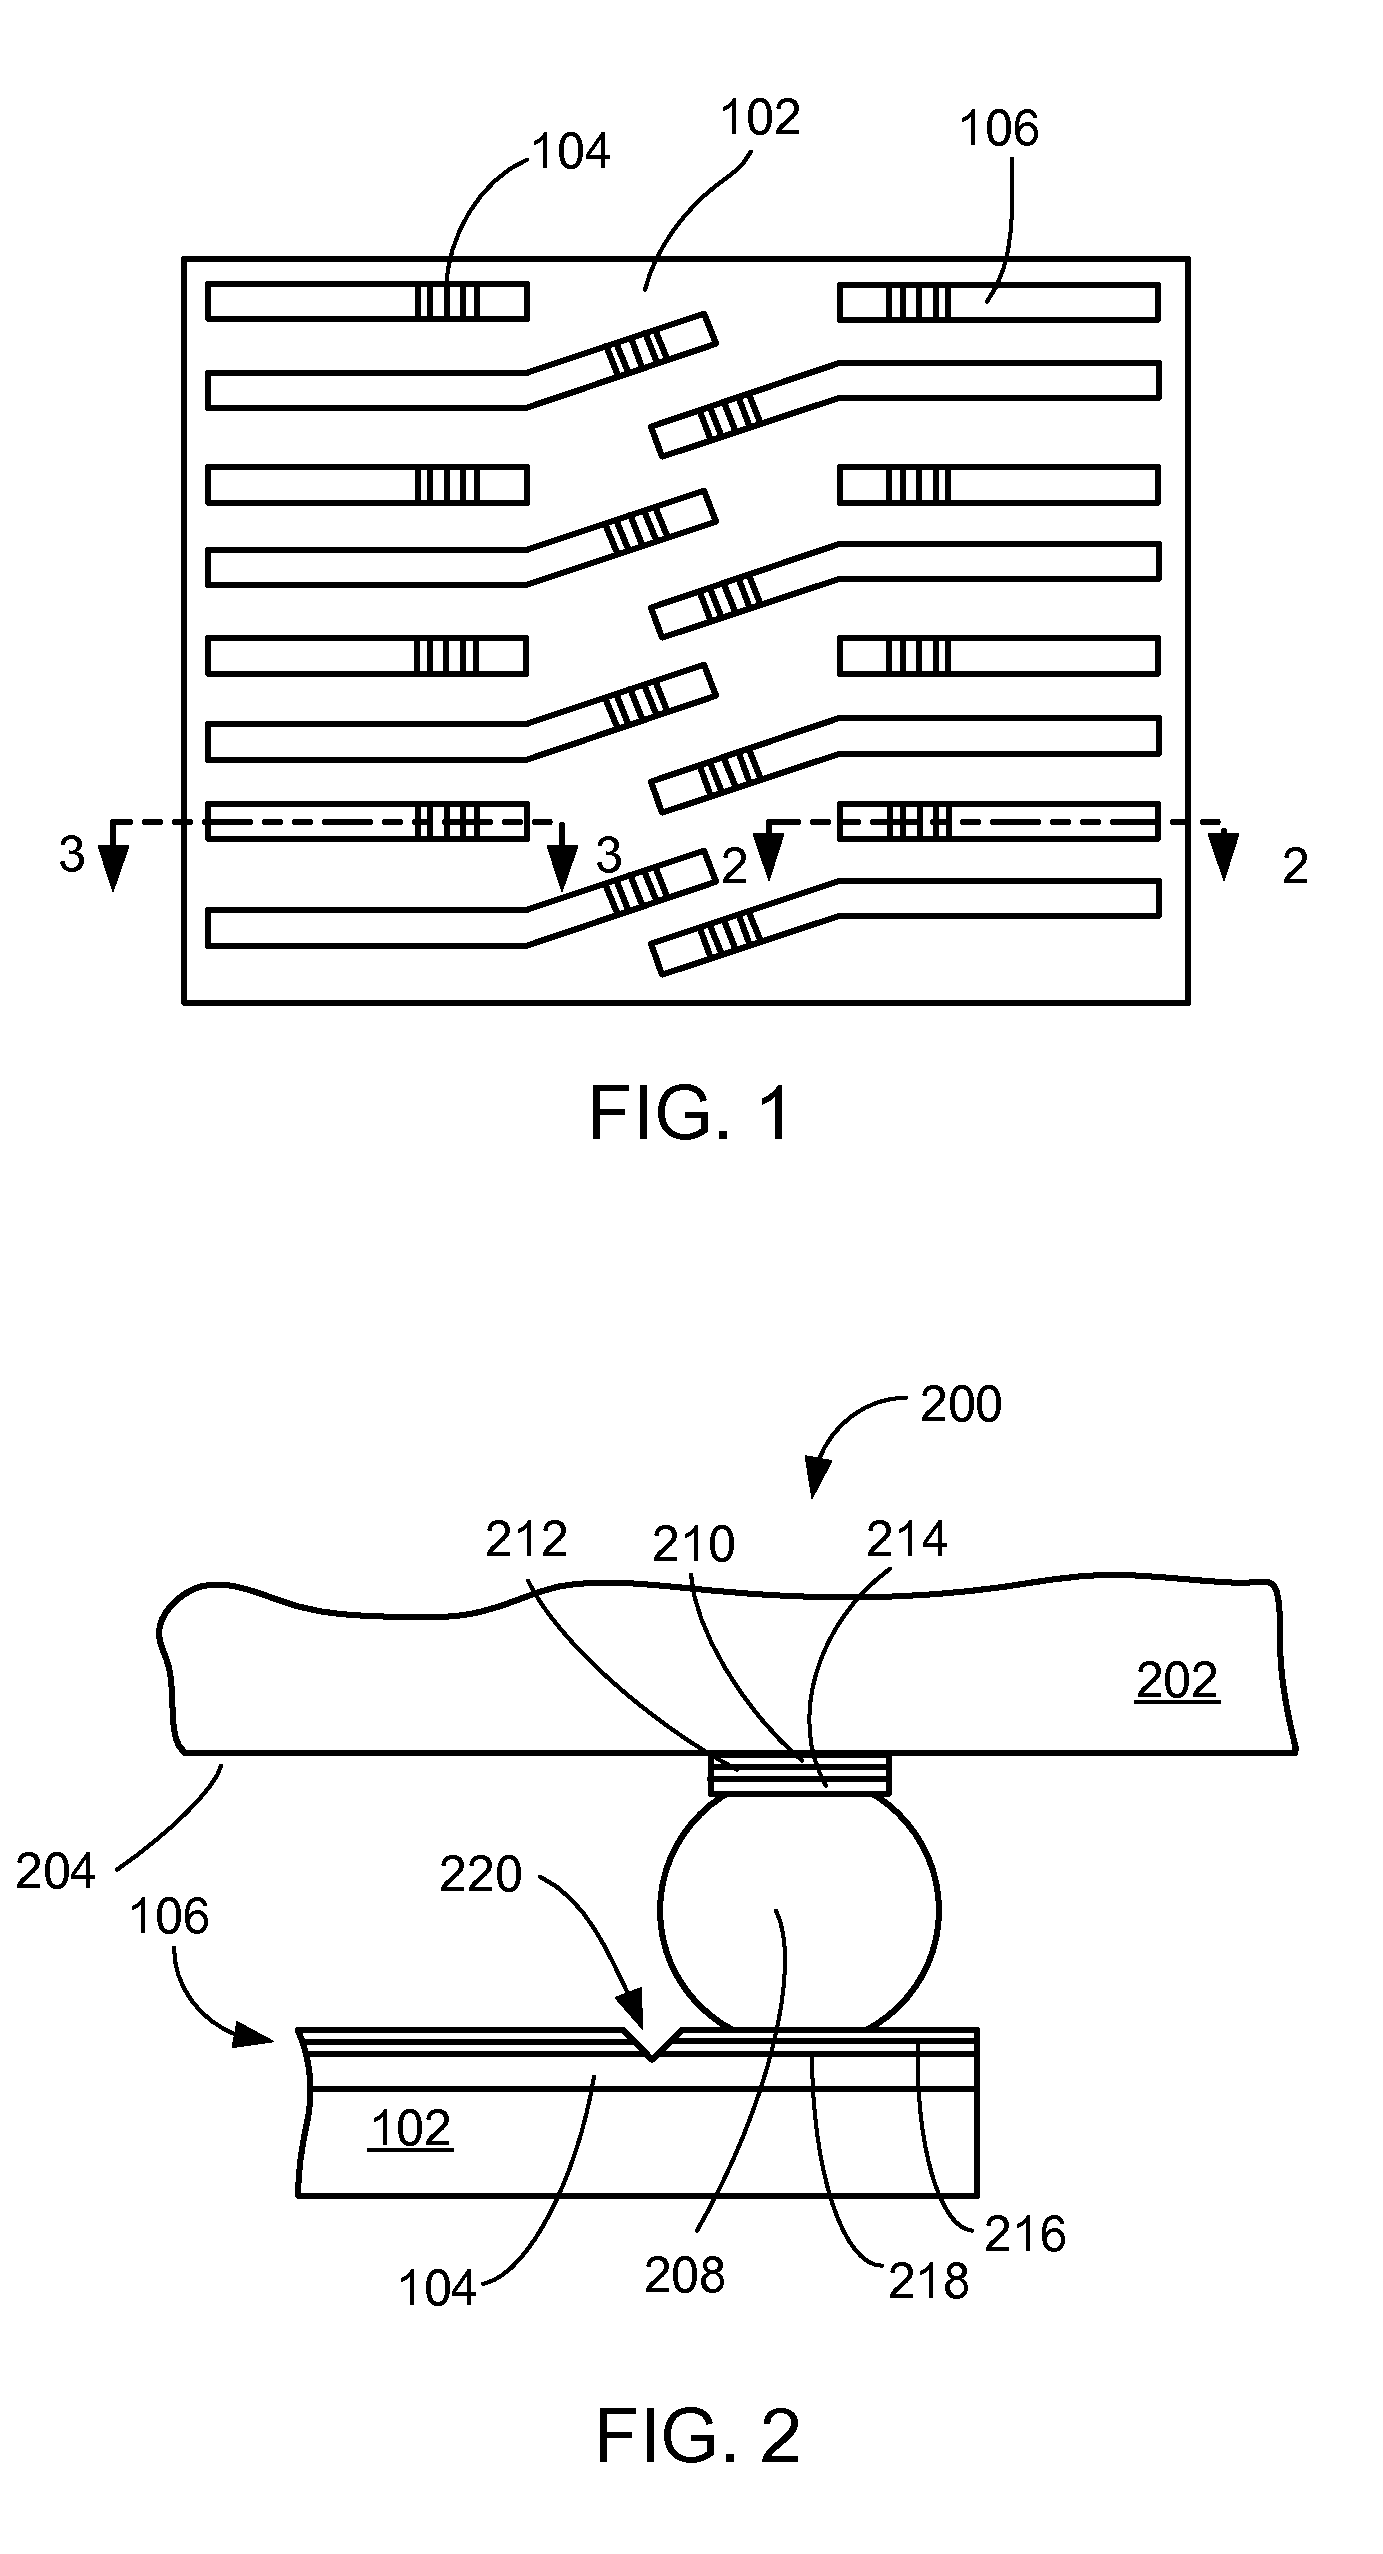 Flip chip interconnection system